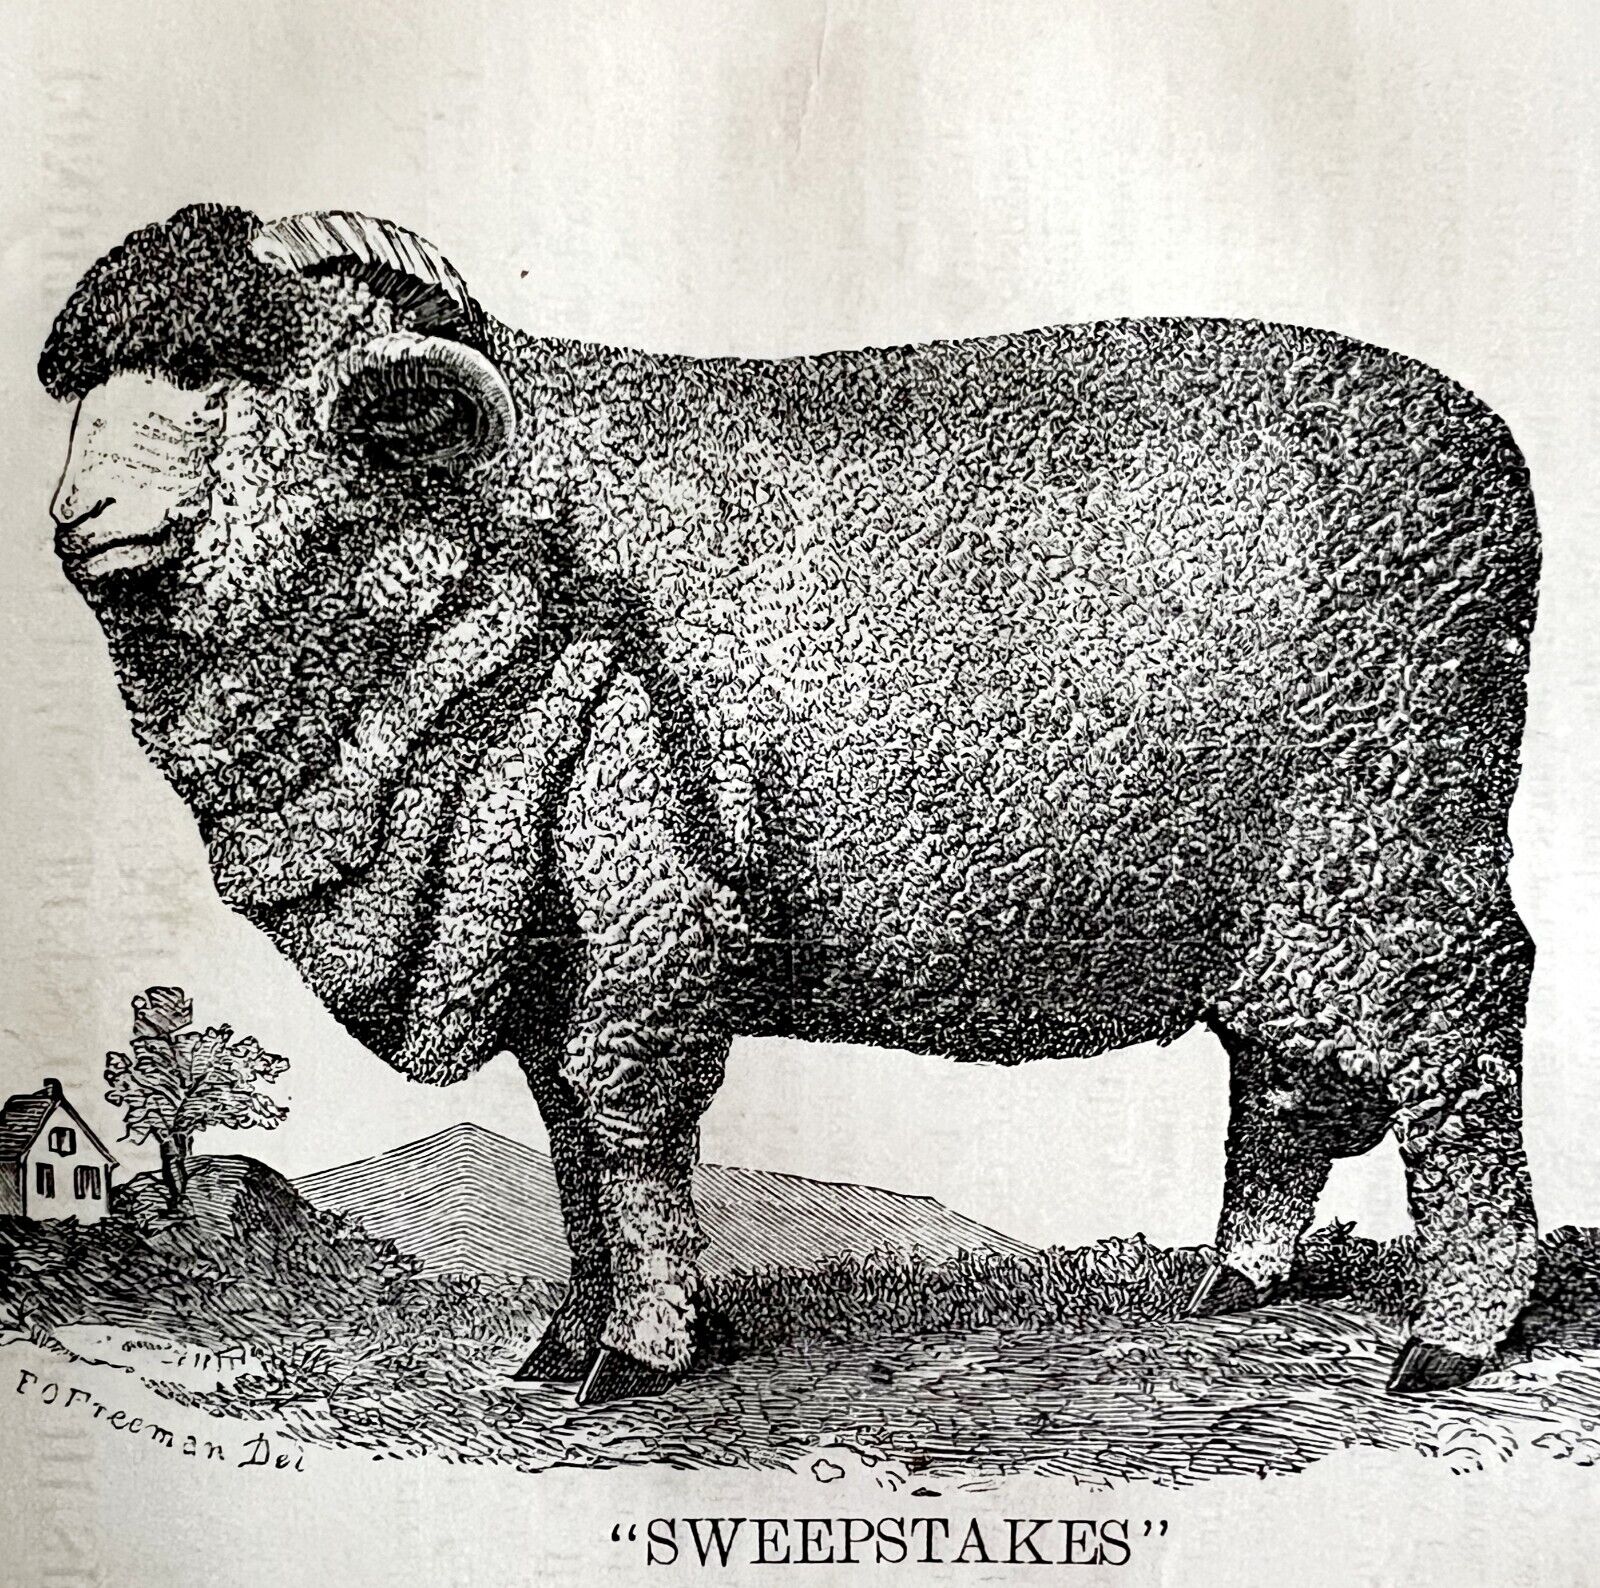 Sweepstakes Spanish Merino Ram 1863 Victorian Agriculture Animals Art DWZ4A